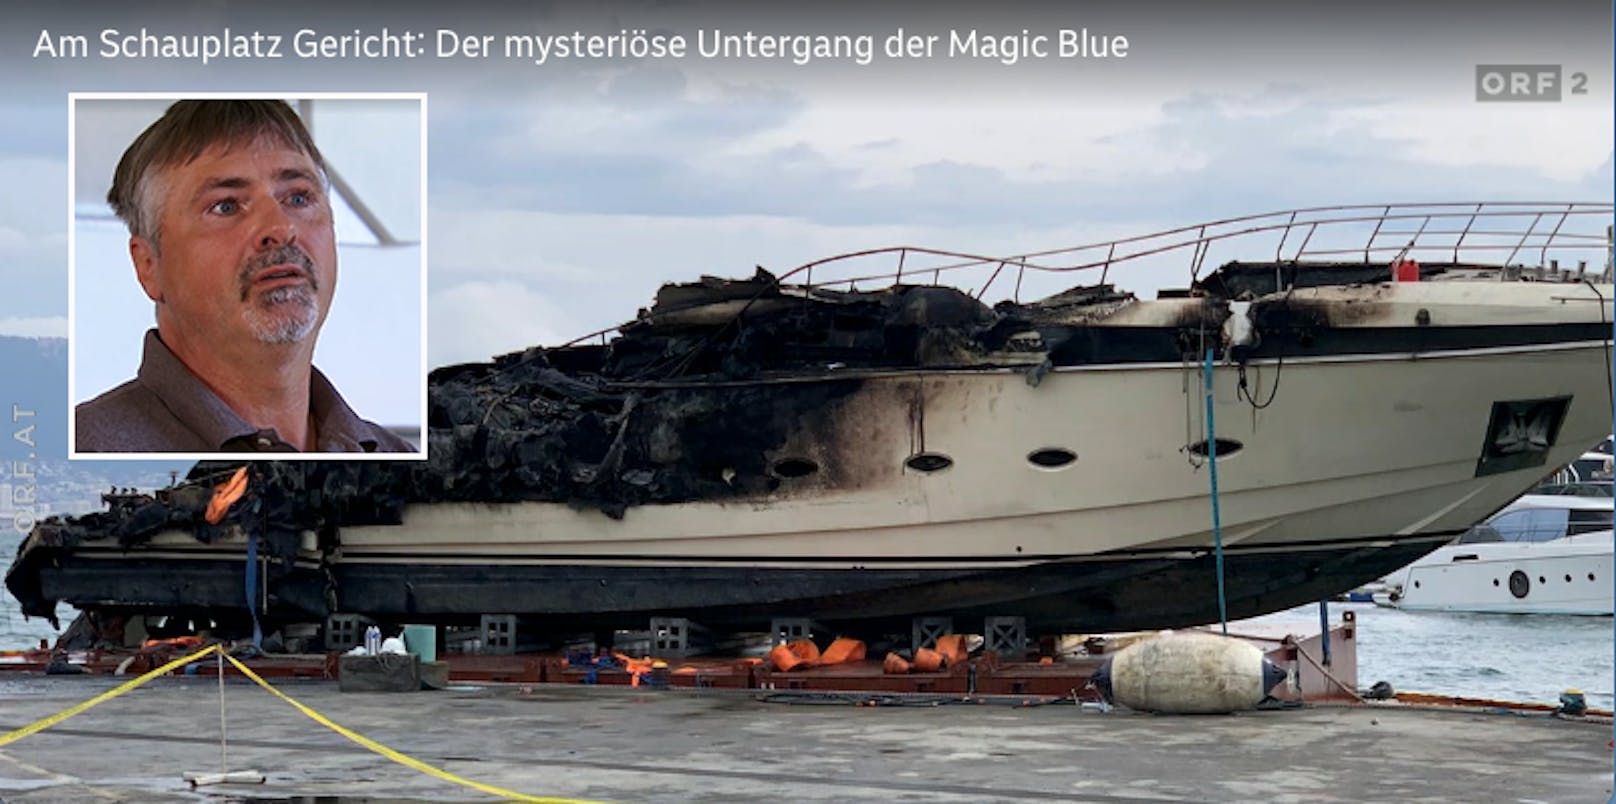 Armin E. (o.) erwarb um 200.000 Euro die "Lady Amethyst". Doch die Yacht brannte ab, ein Mann starb.